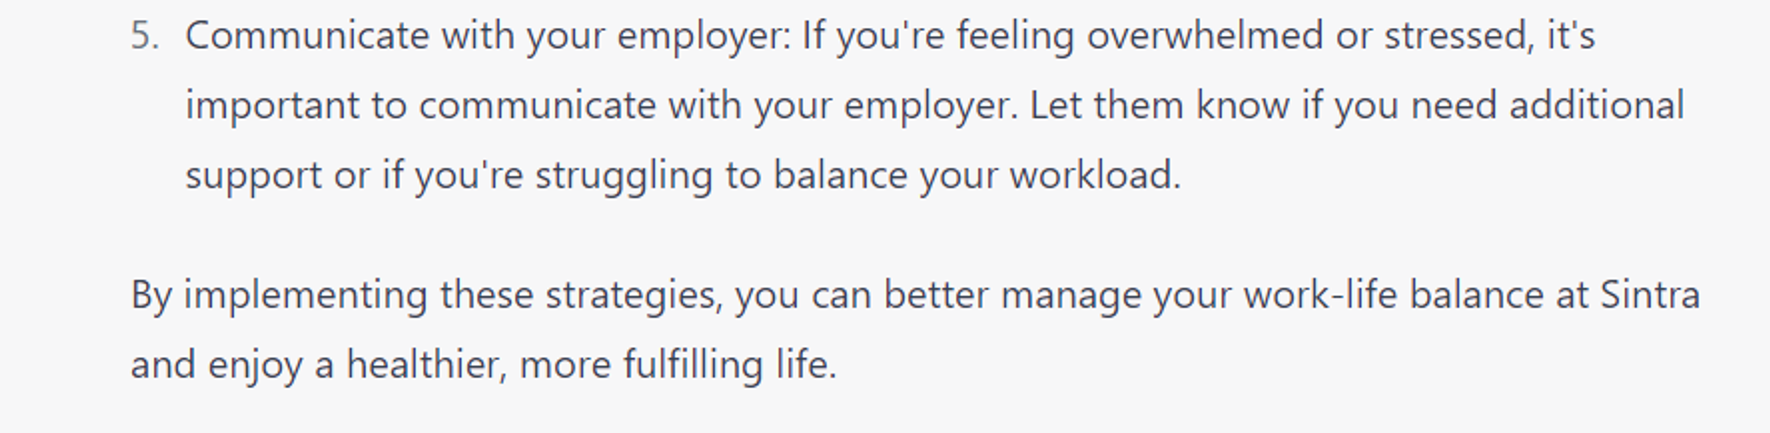  7 Advanced ChatGPT Prompts: Help manage work-life balance